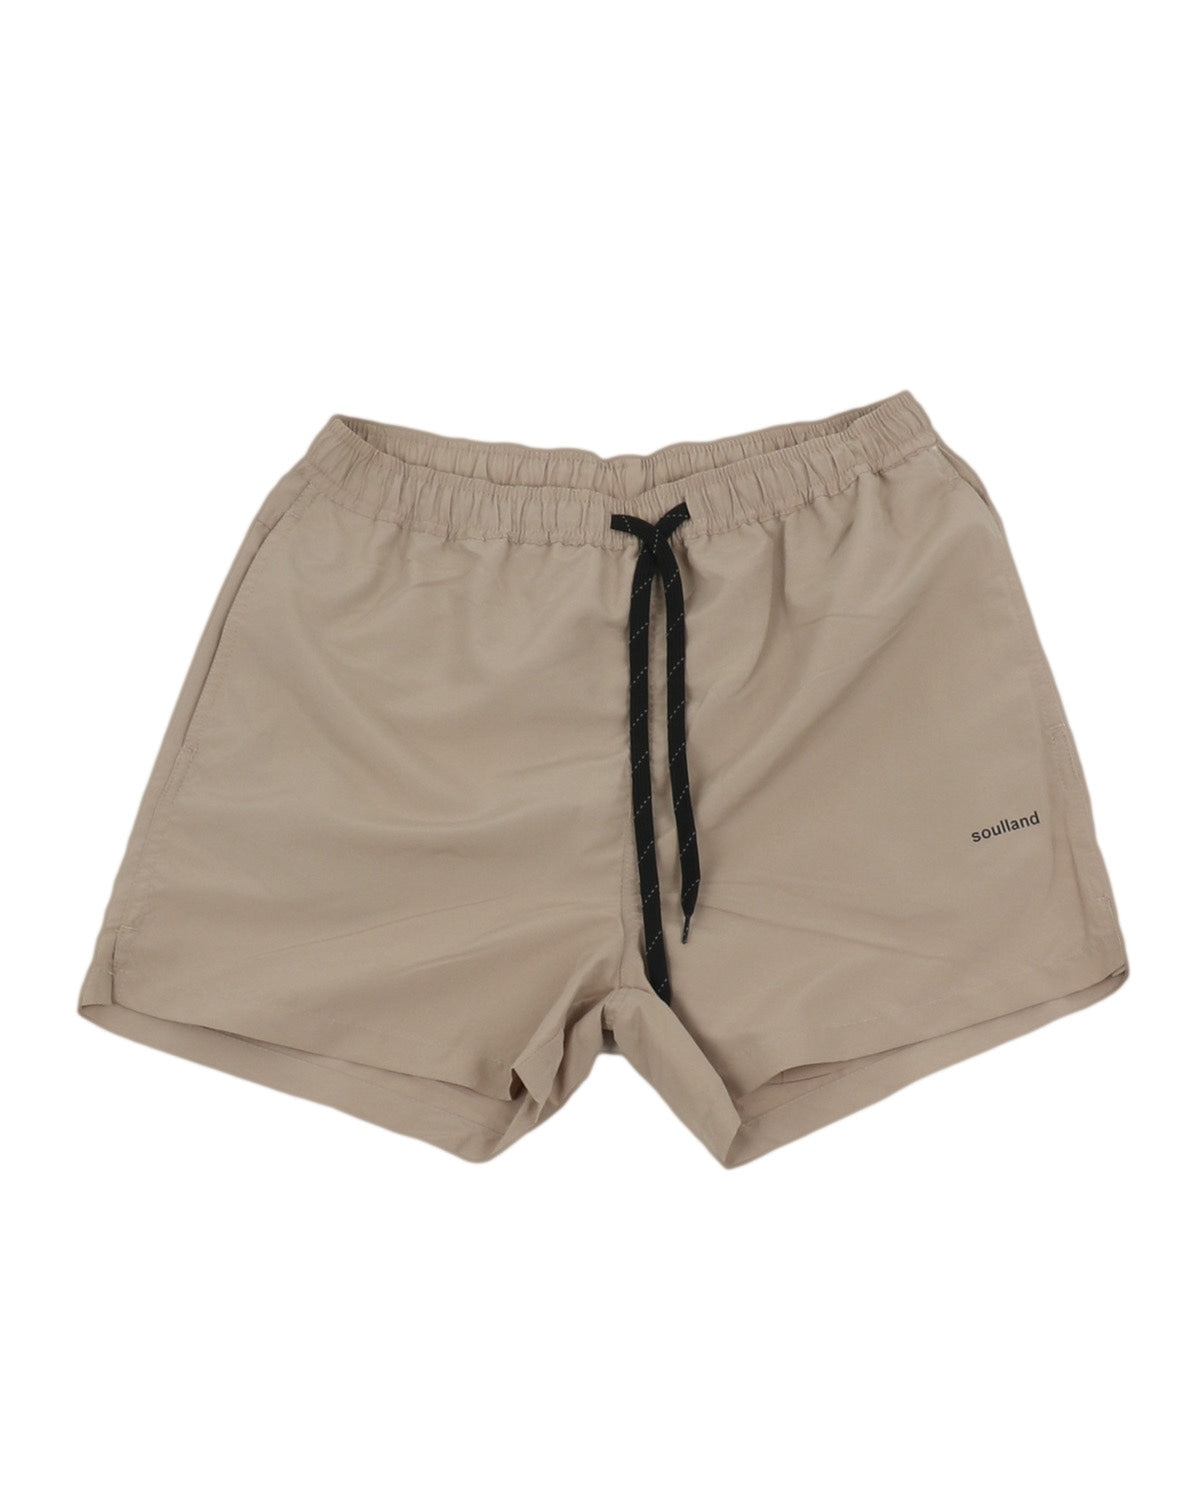 soulland_william shorts_beige_1_3